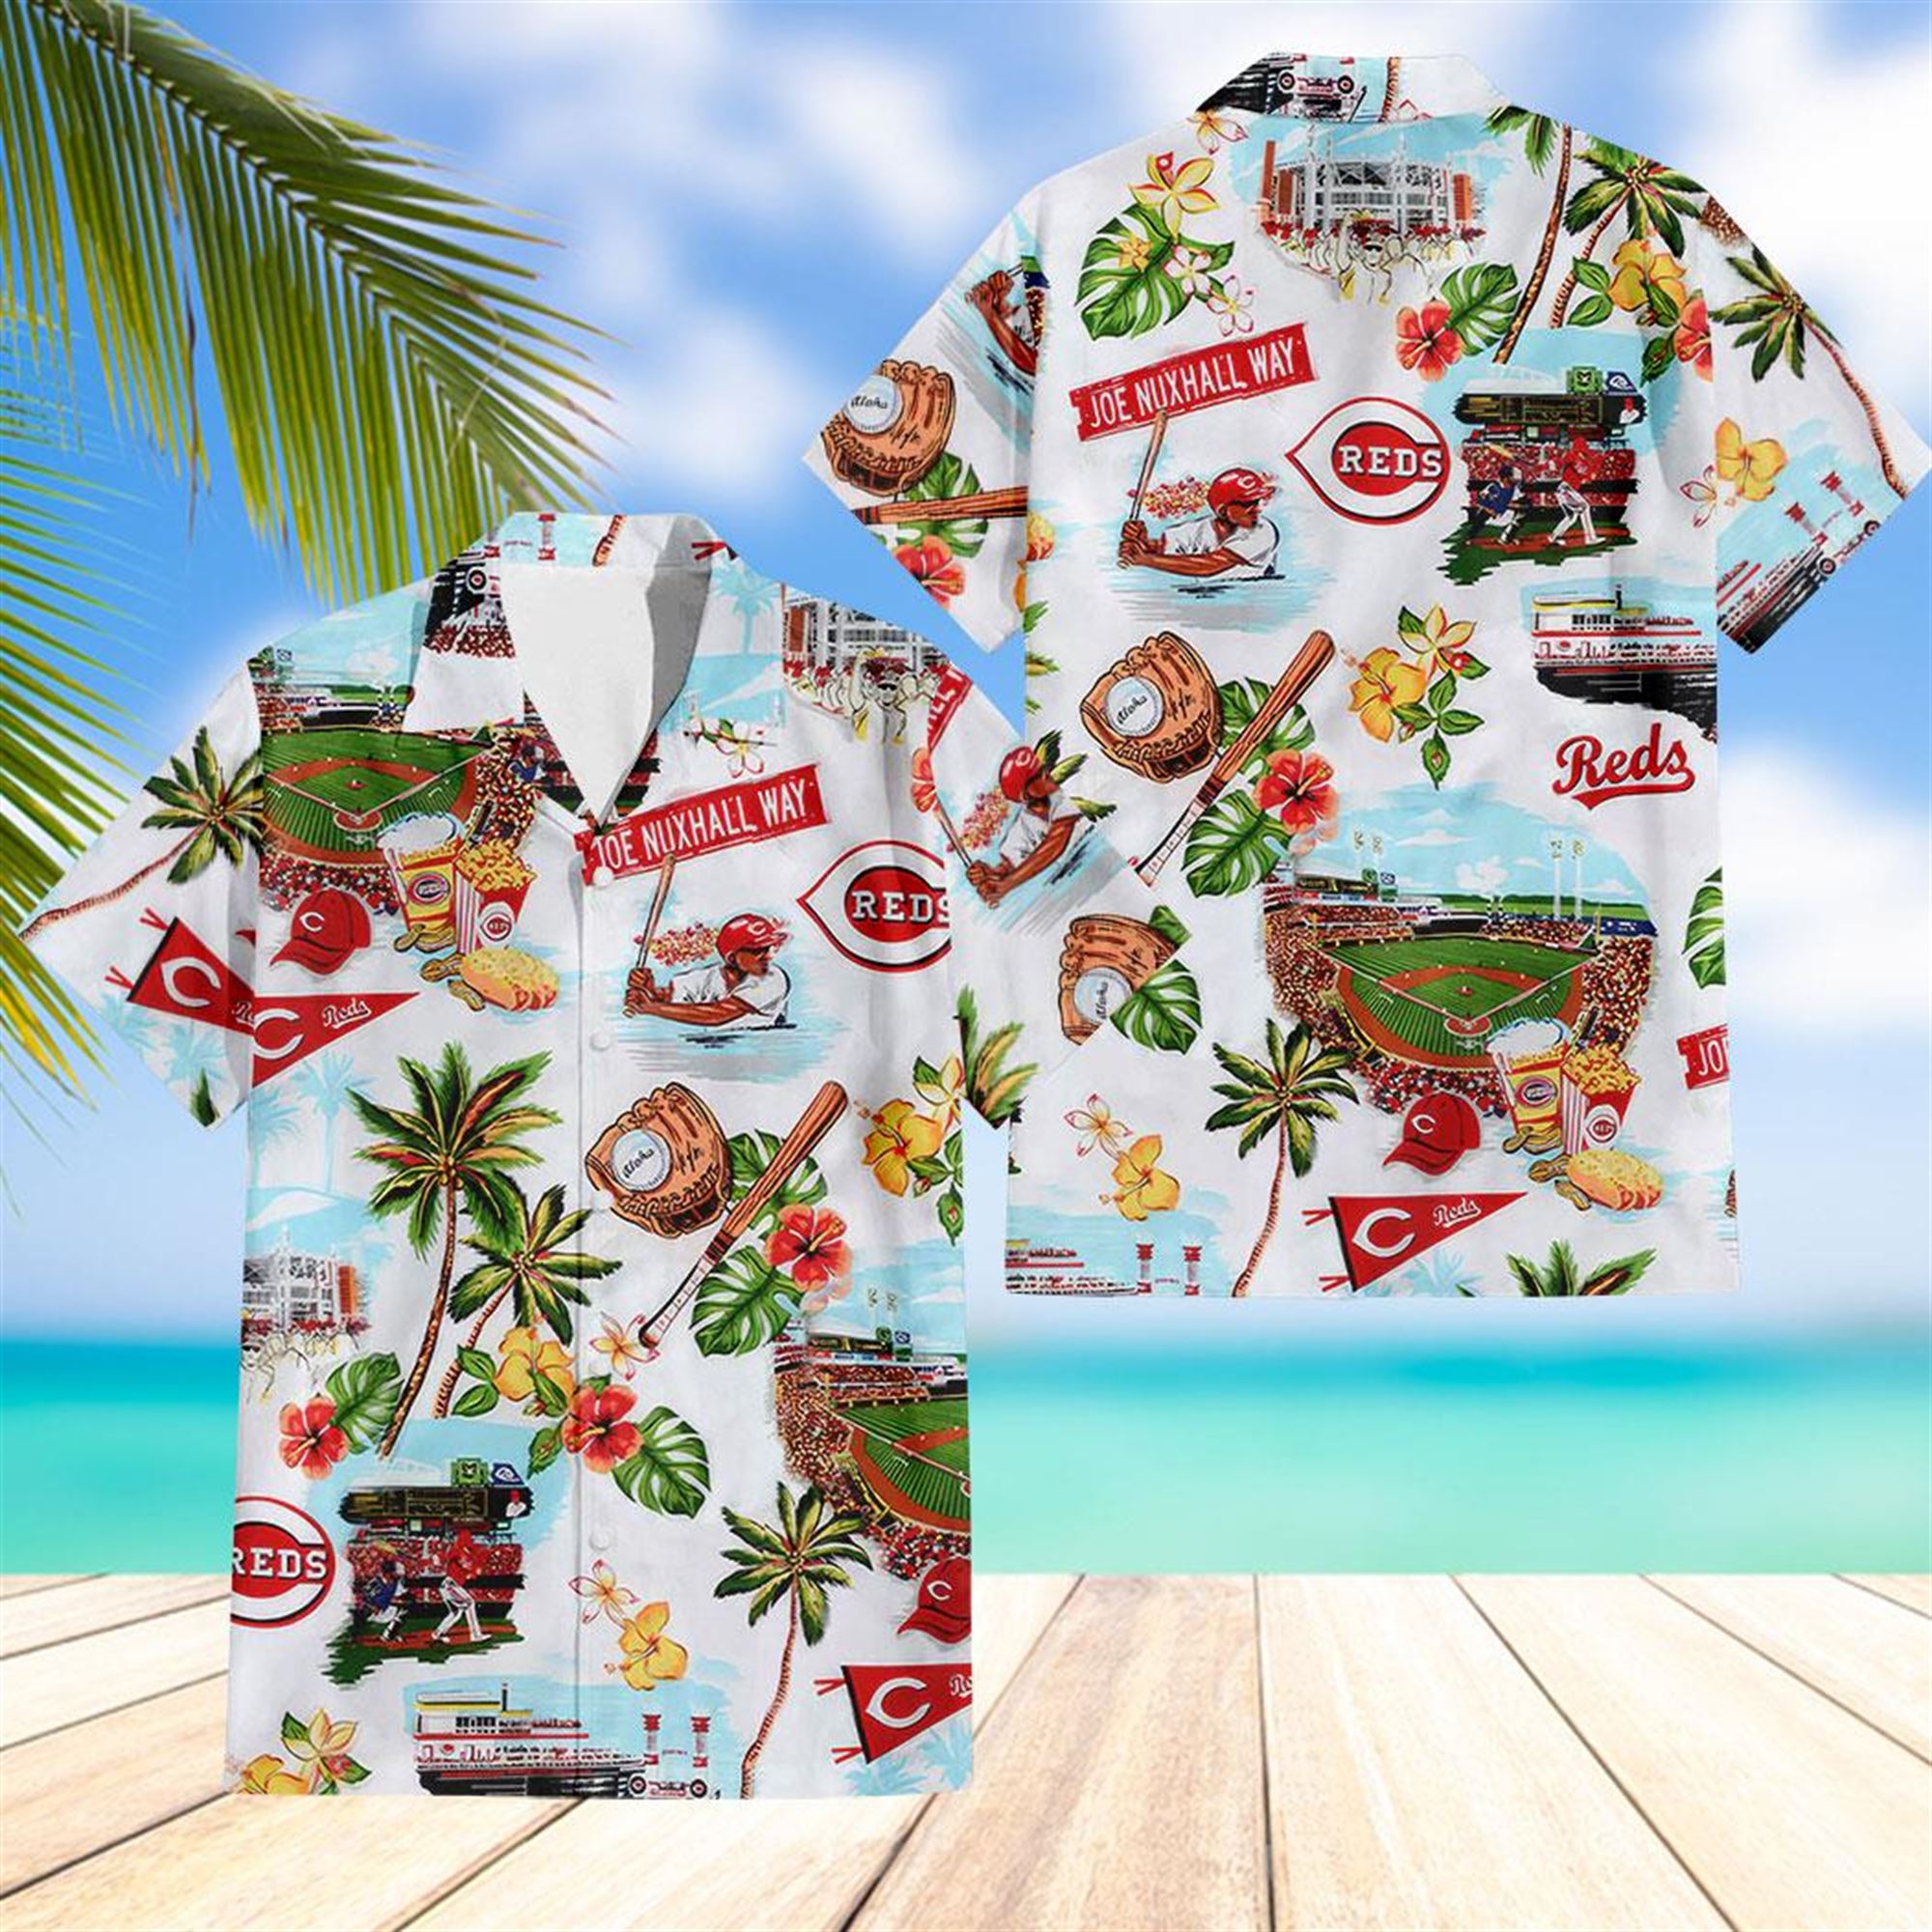 New York Mets Pineapple Tropical Hawaiian Shirt